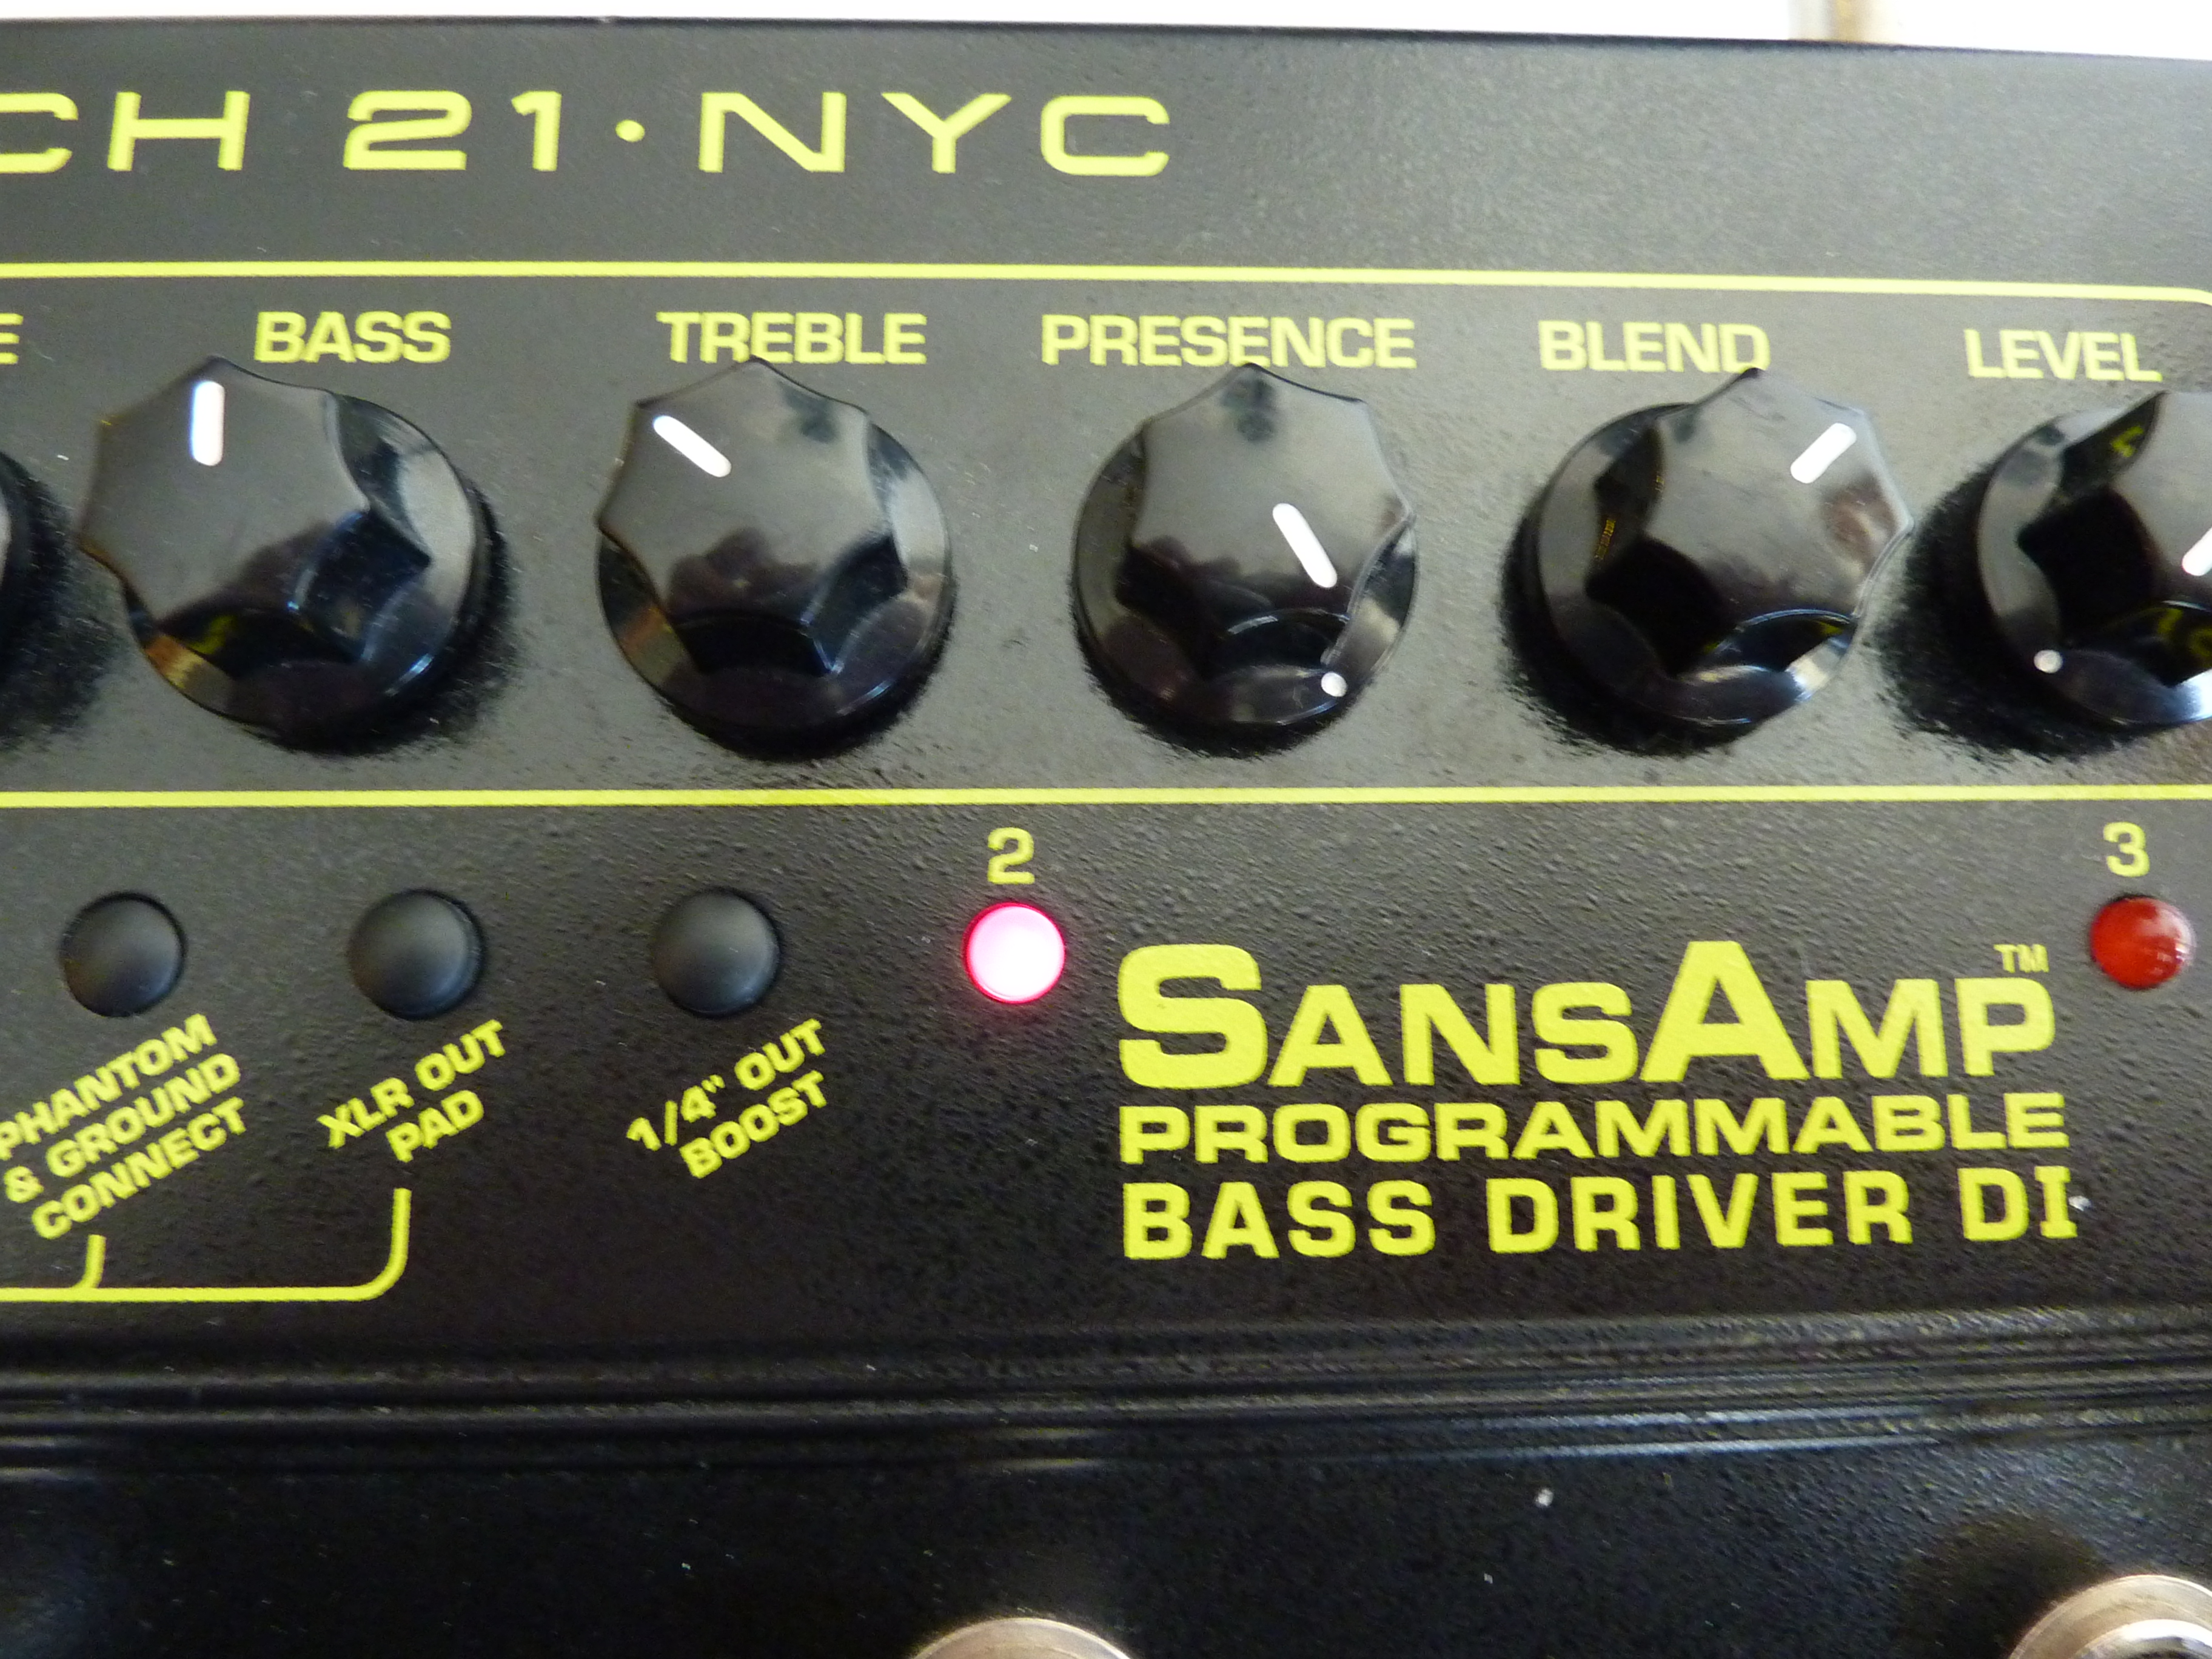 Photo Tech 21 SansAmp Bass Driver DI Programmable : Tech 21 SansAmp